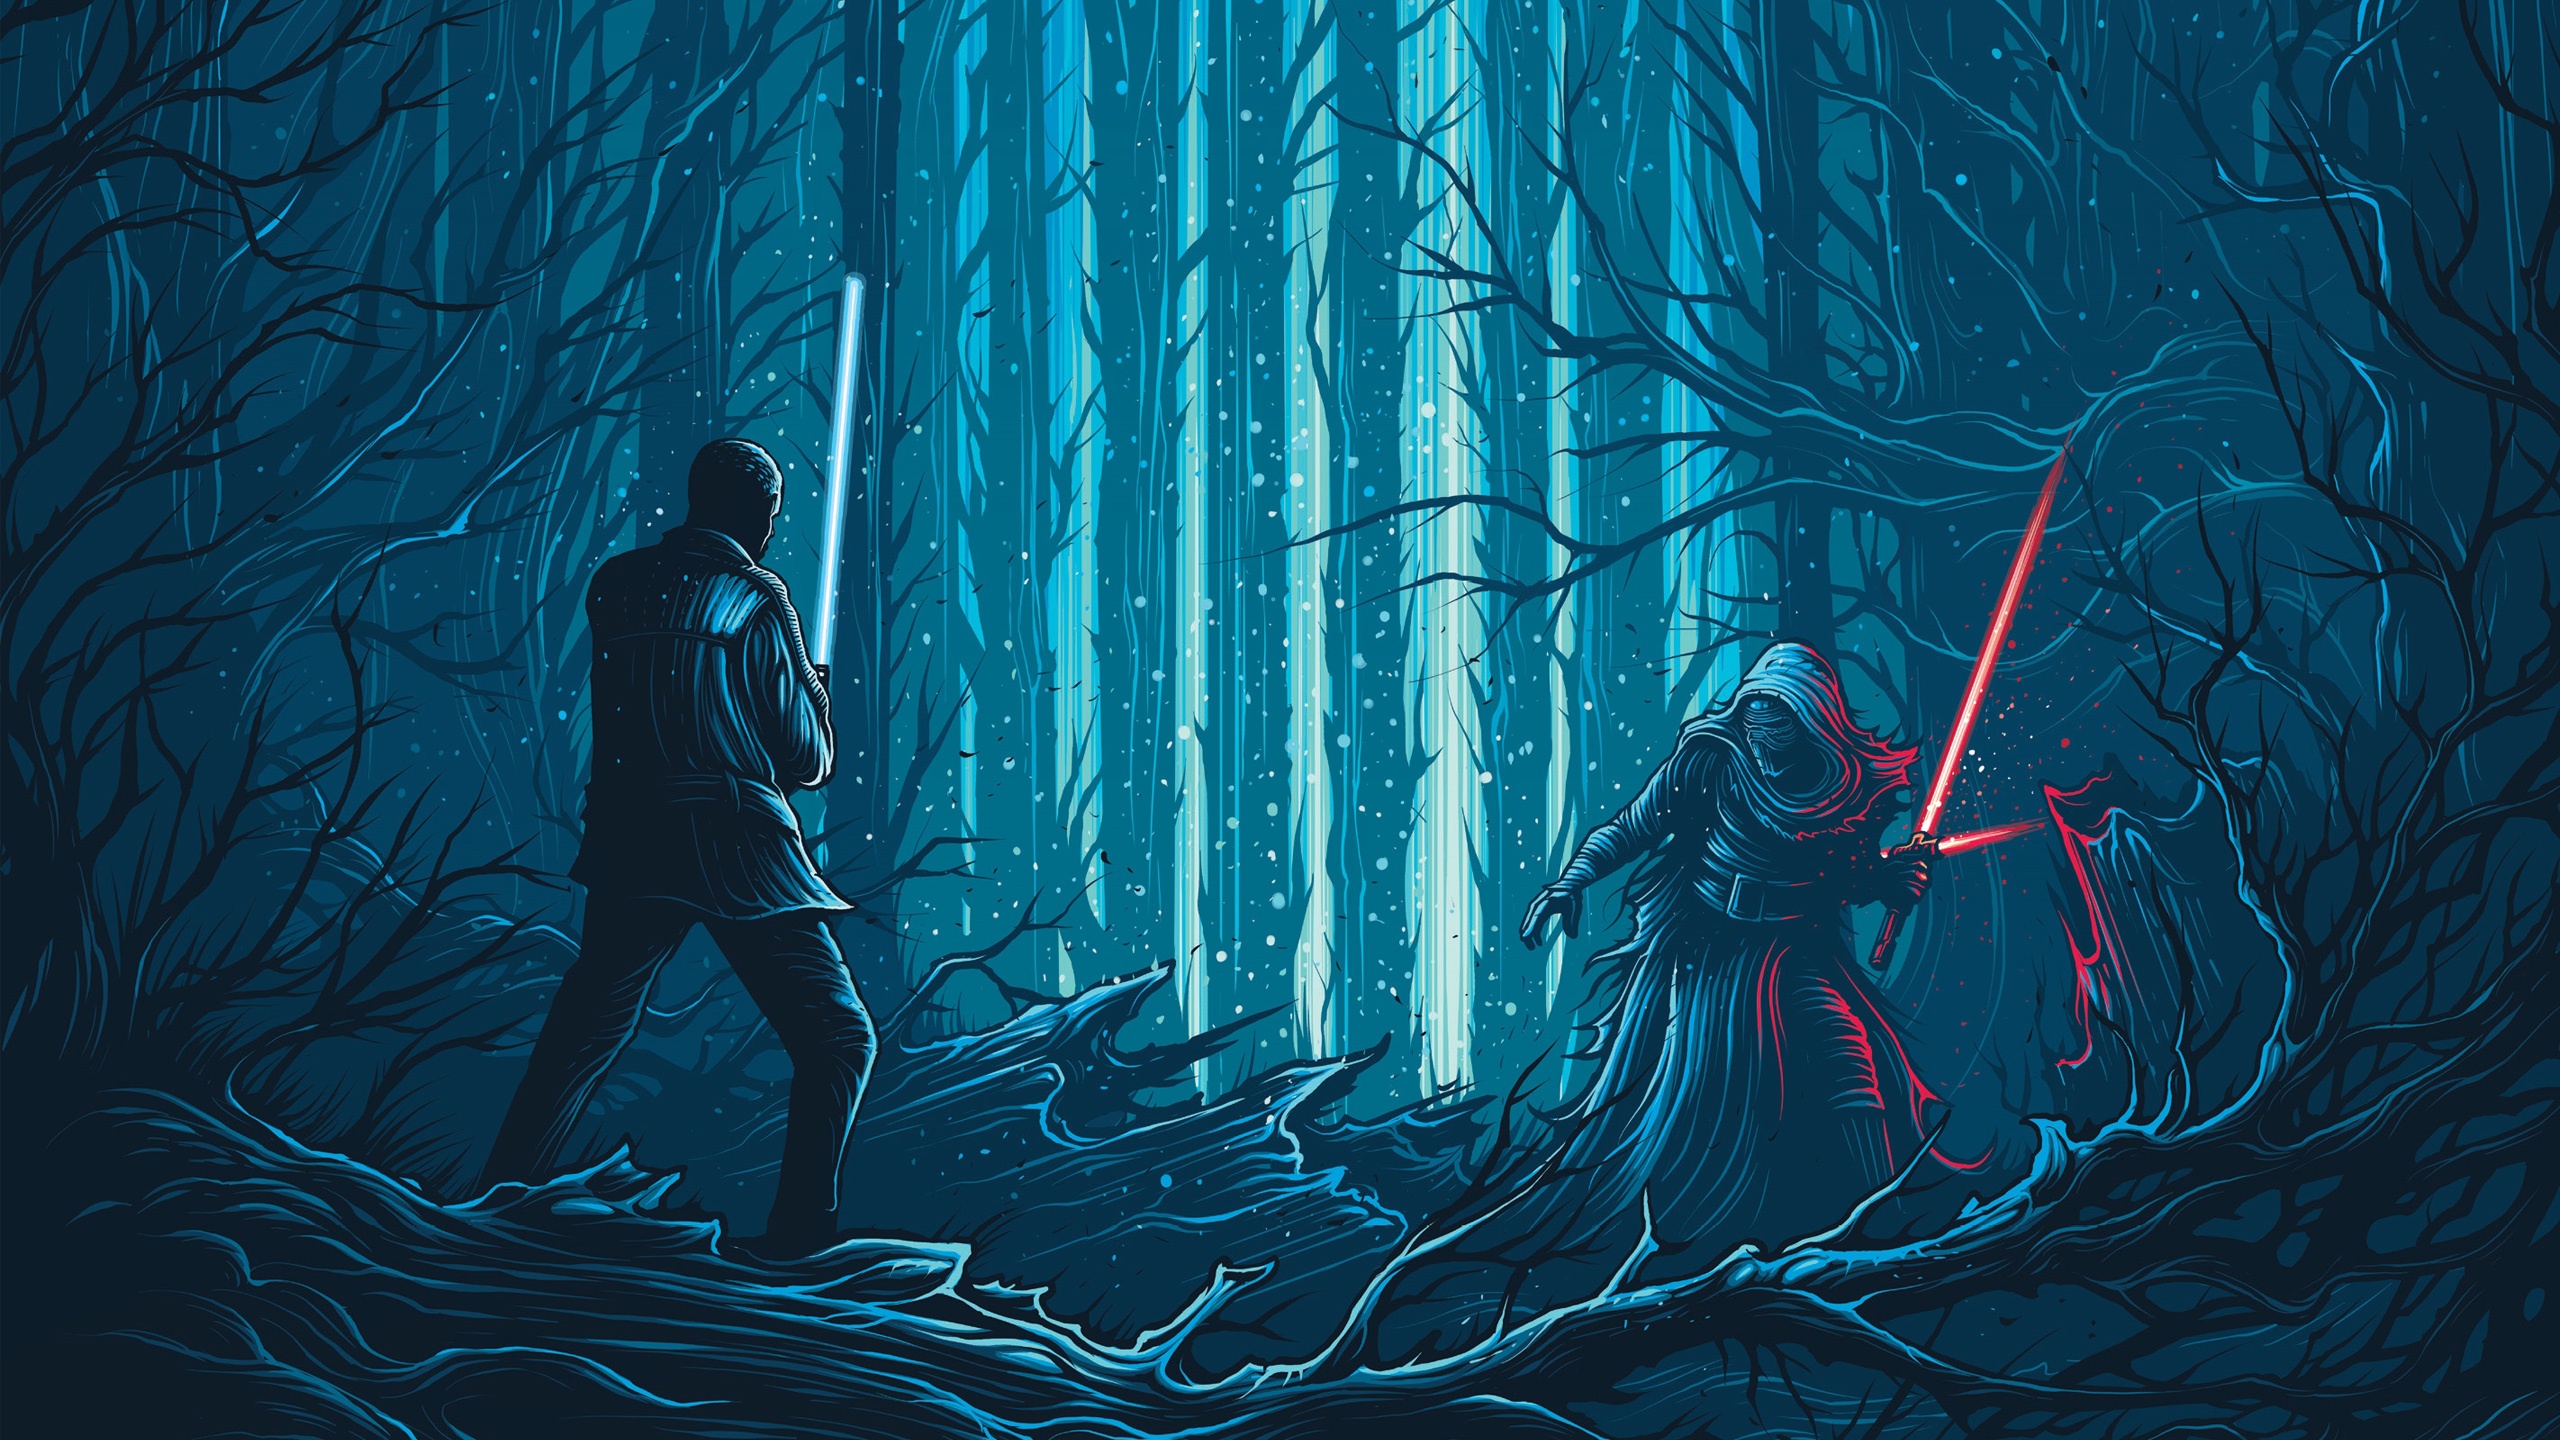 Star Wars: The Force Awakens, Star Wars Wallpaper